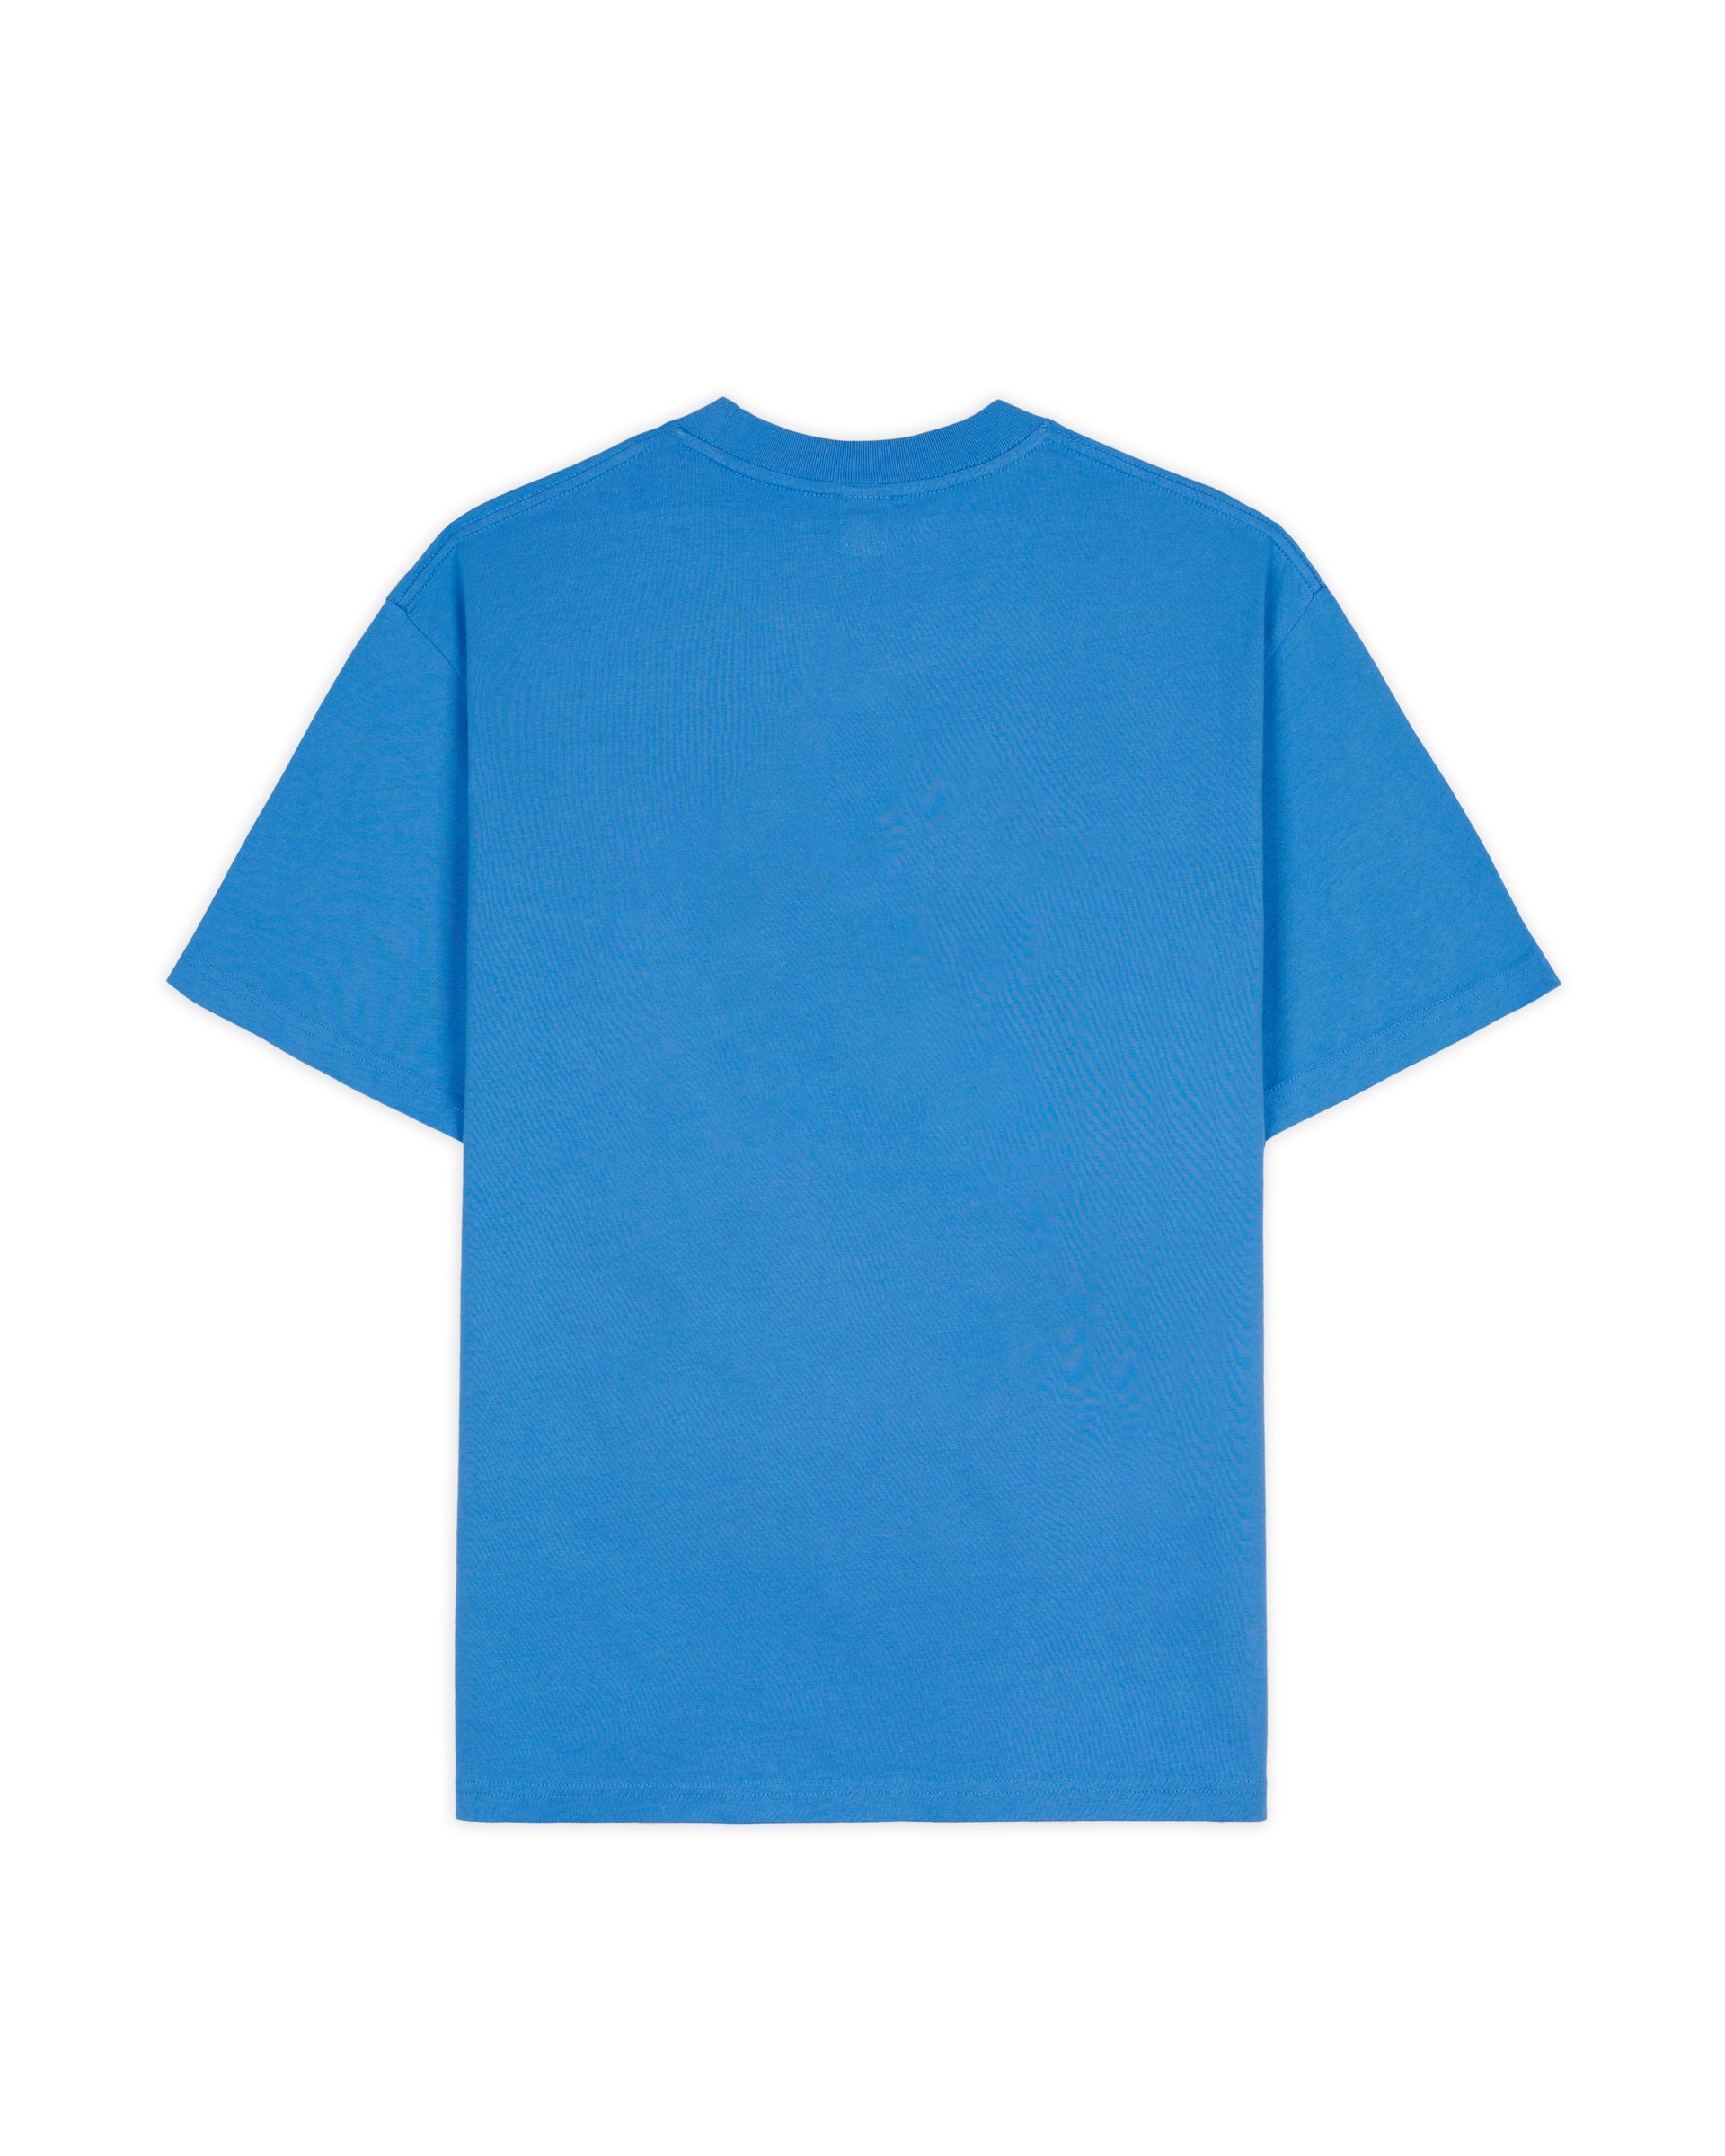 plain light blue t shirt